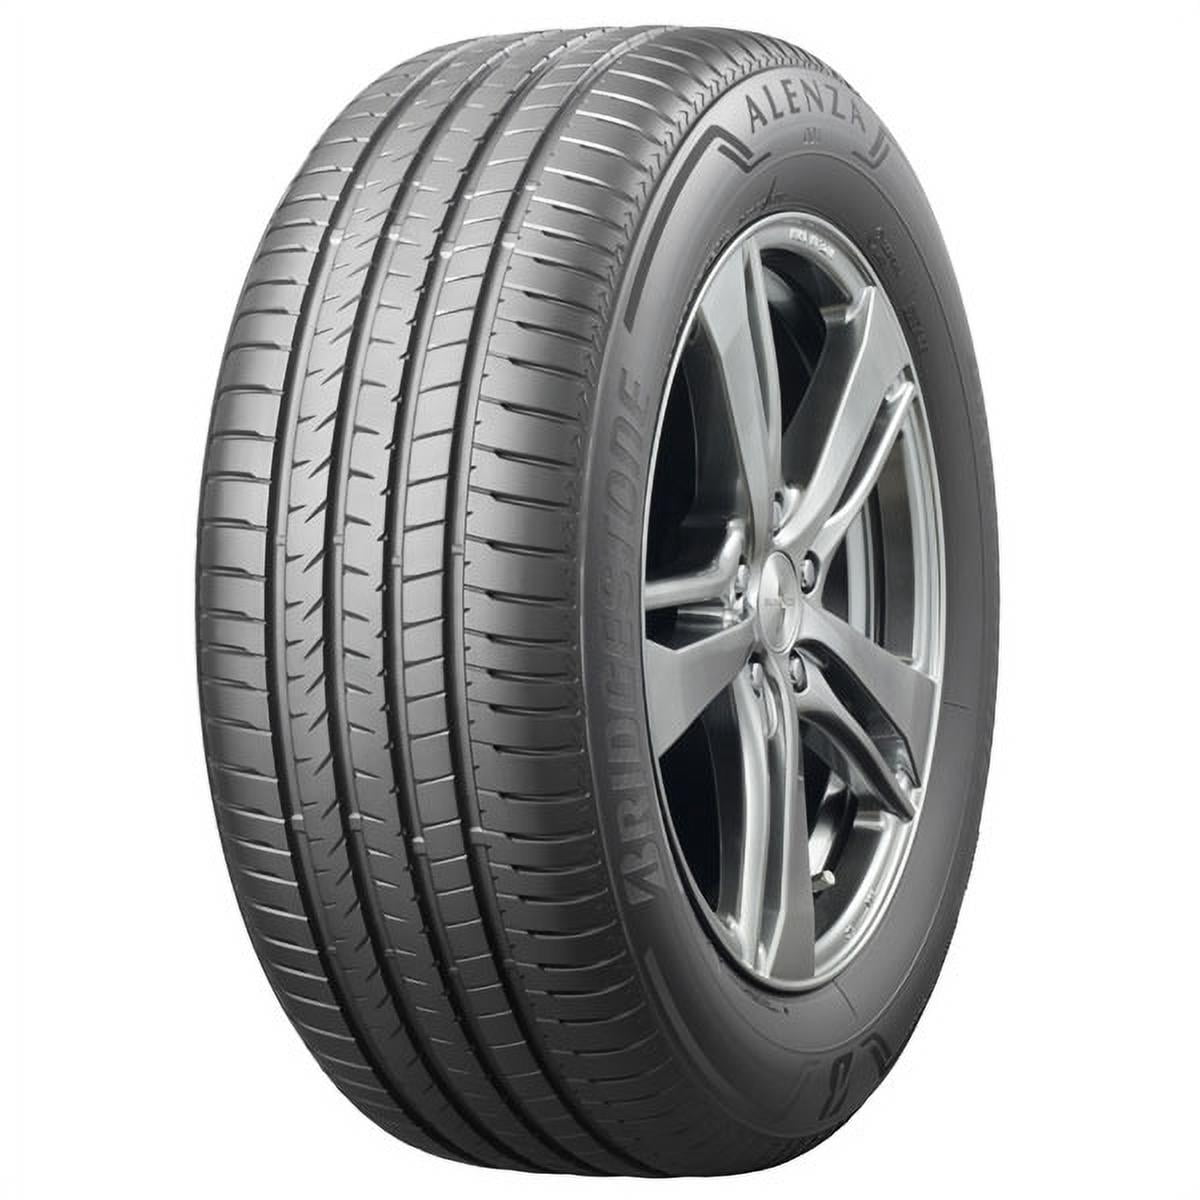 Bridgestone Alenza A/S 02 All Season 225/65R17 102H Passenger Tire Fits:  2018-23 Chevrolet Equinox LT, 2015-17 Subaru Outback 3.6R Touring